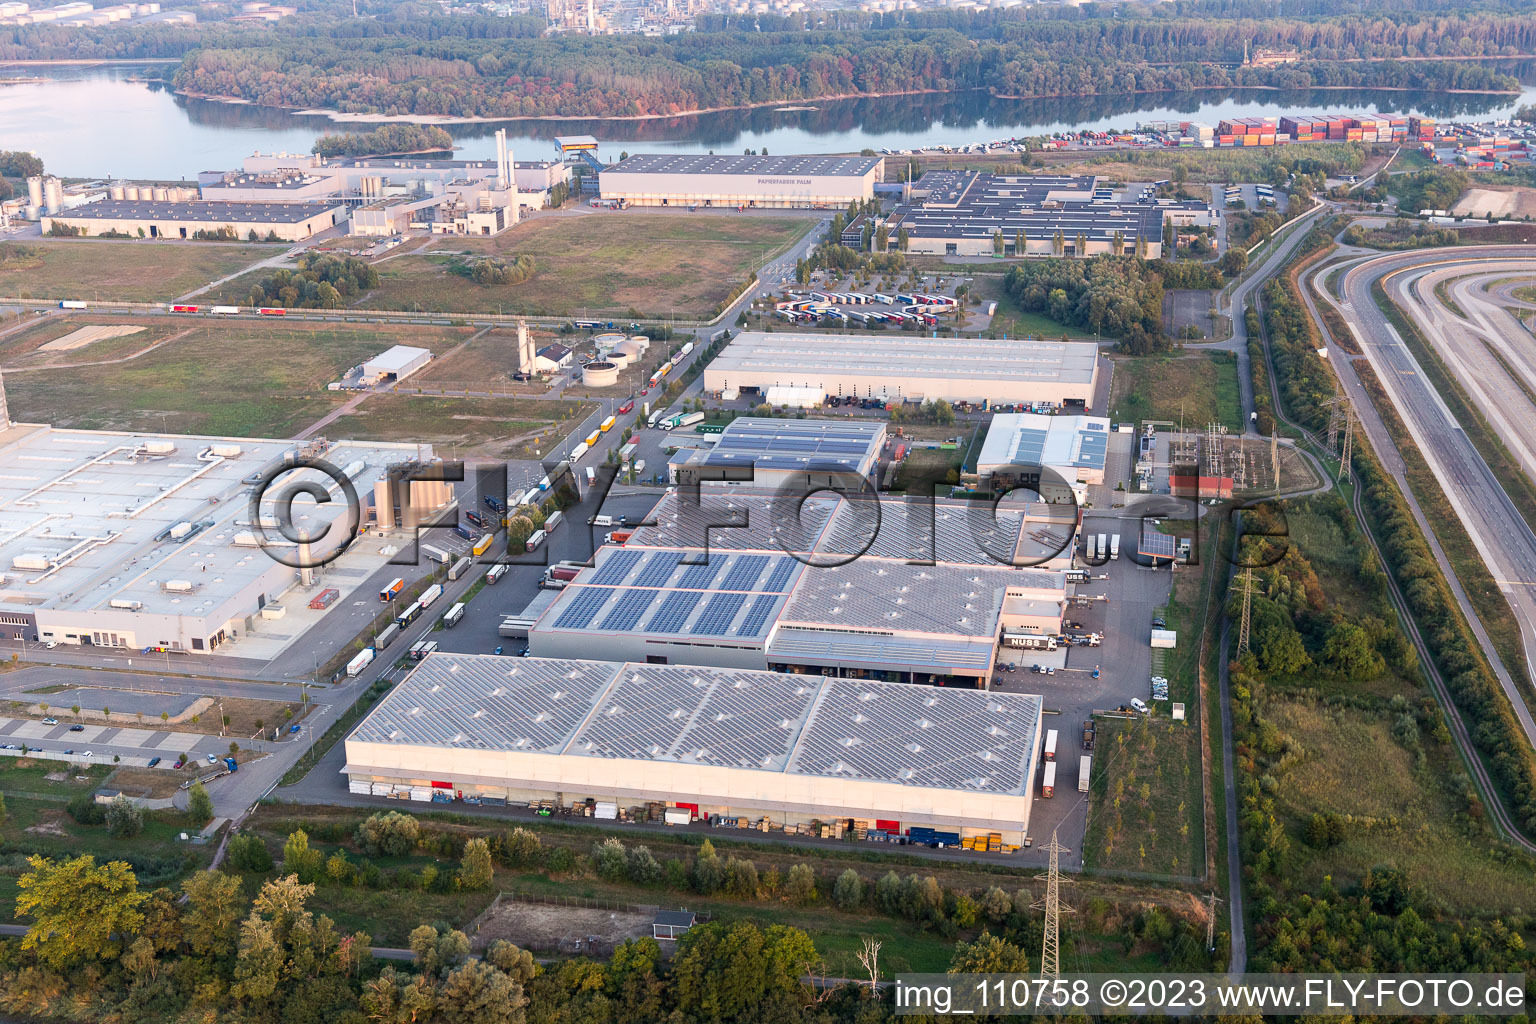 Aerial view of Oberwald industrial area in Wörth am Rhein in the state Rhineland-Palatinate, Germany